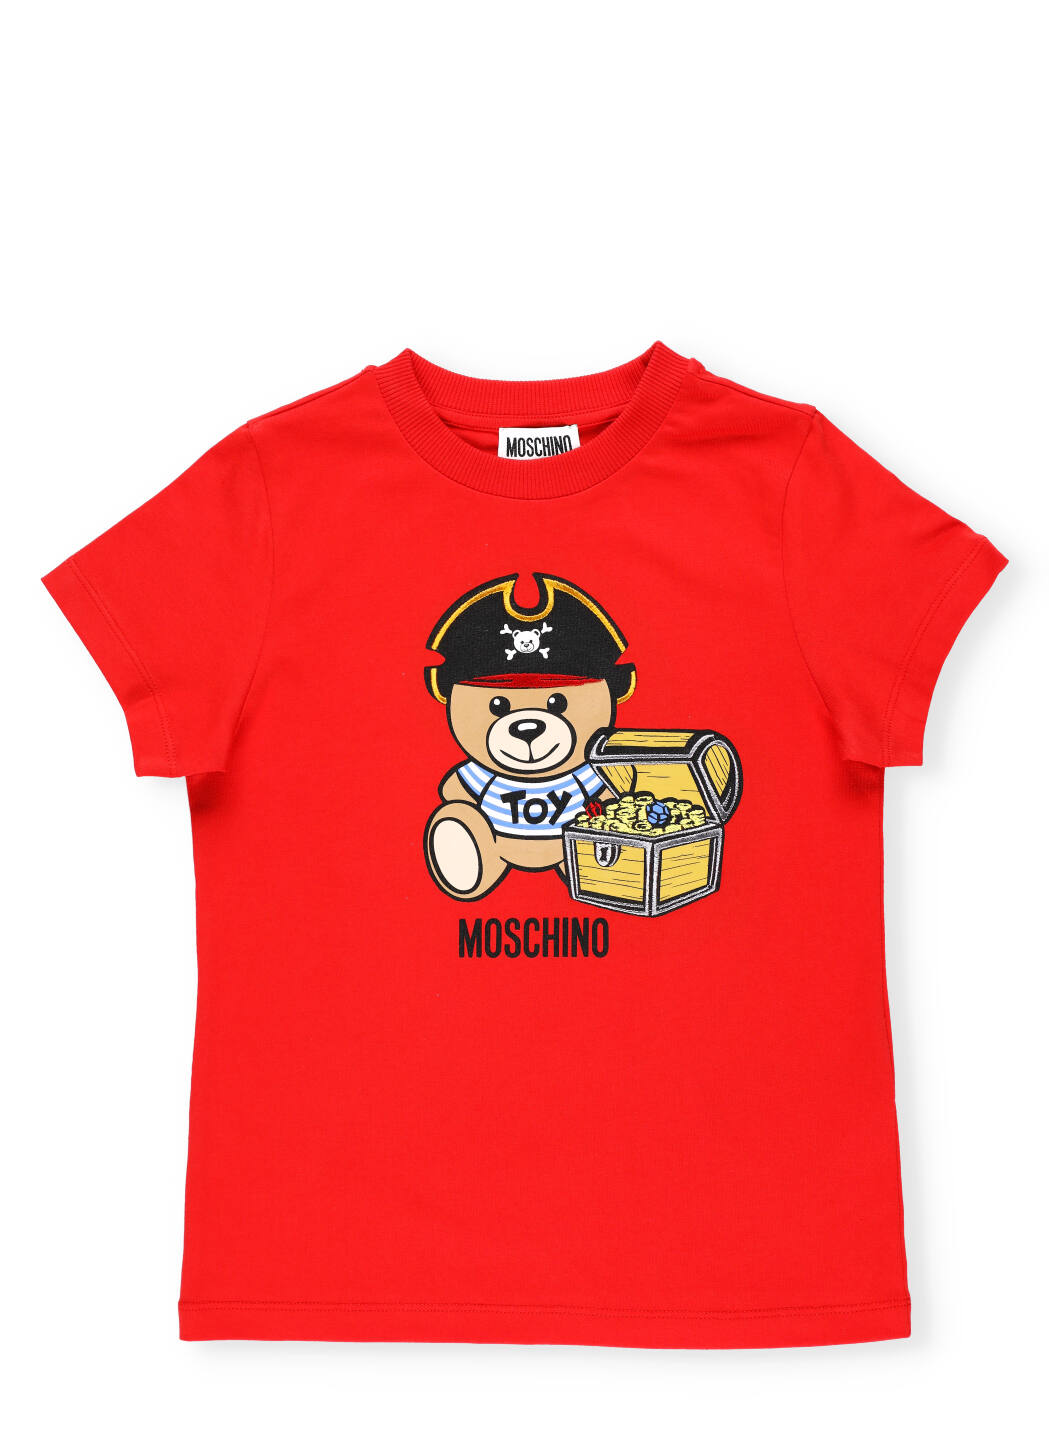 Moschino T-shirt Pirate Teddy Bear